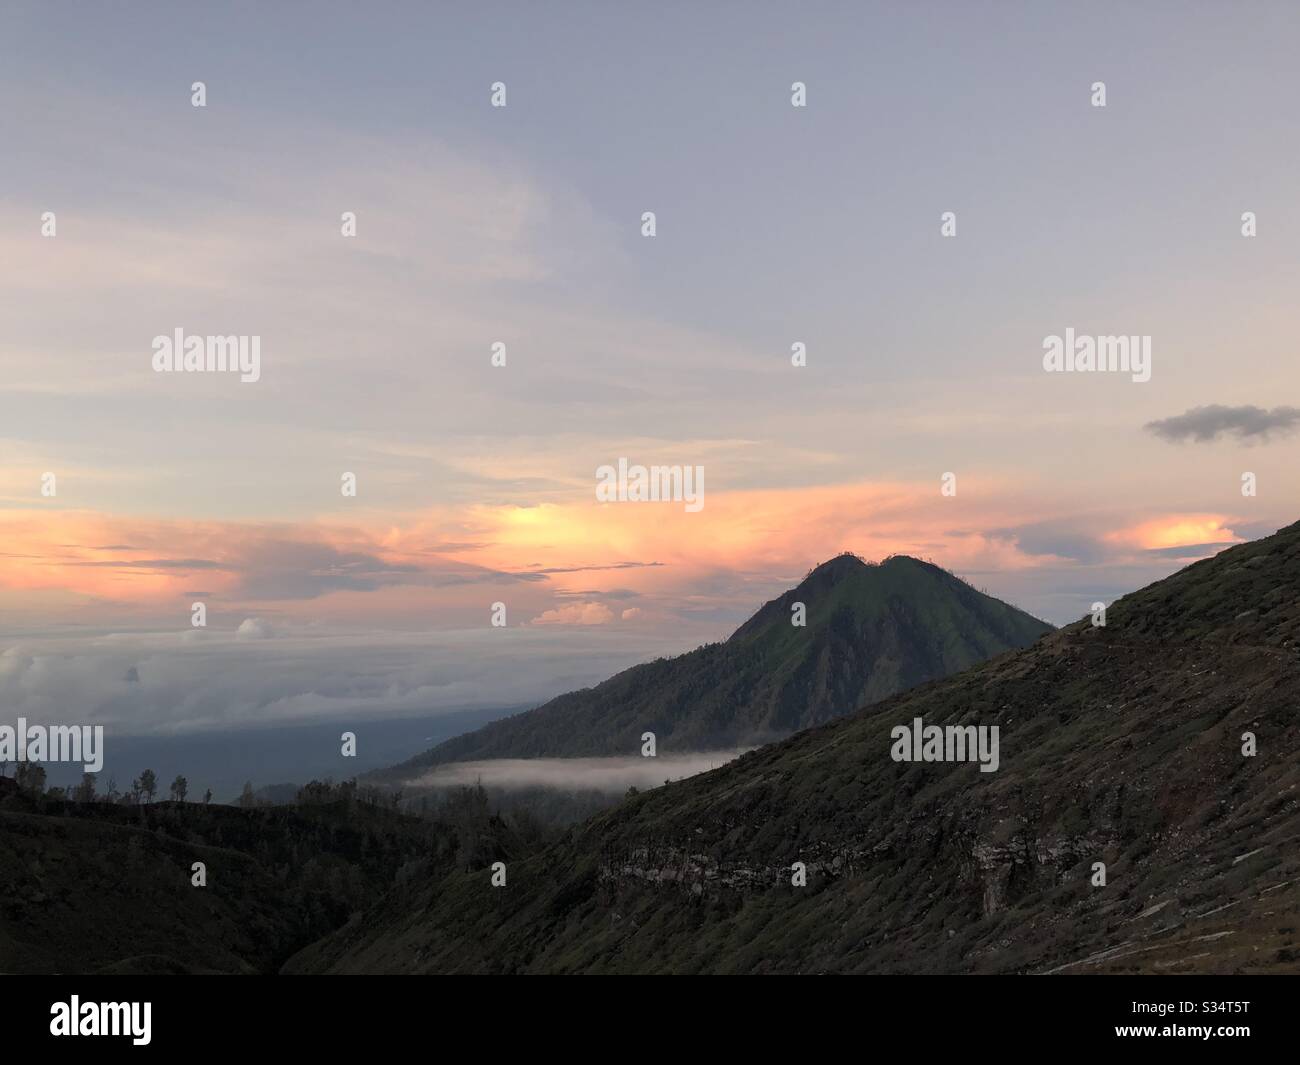 Wunderschöner Sonnenaufgang vom berühmten, aktiven Vulkanier Ijen auf Java, Indonesien. Stockfoto